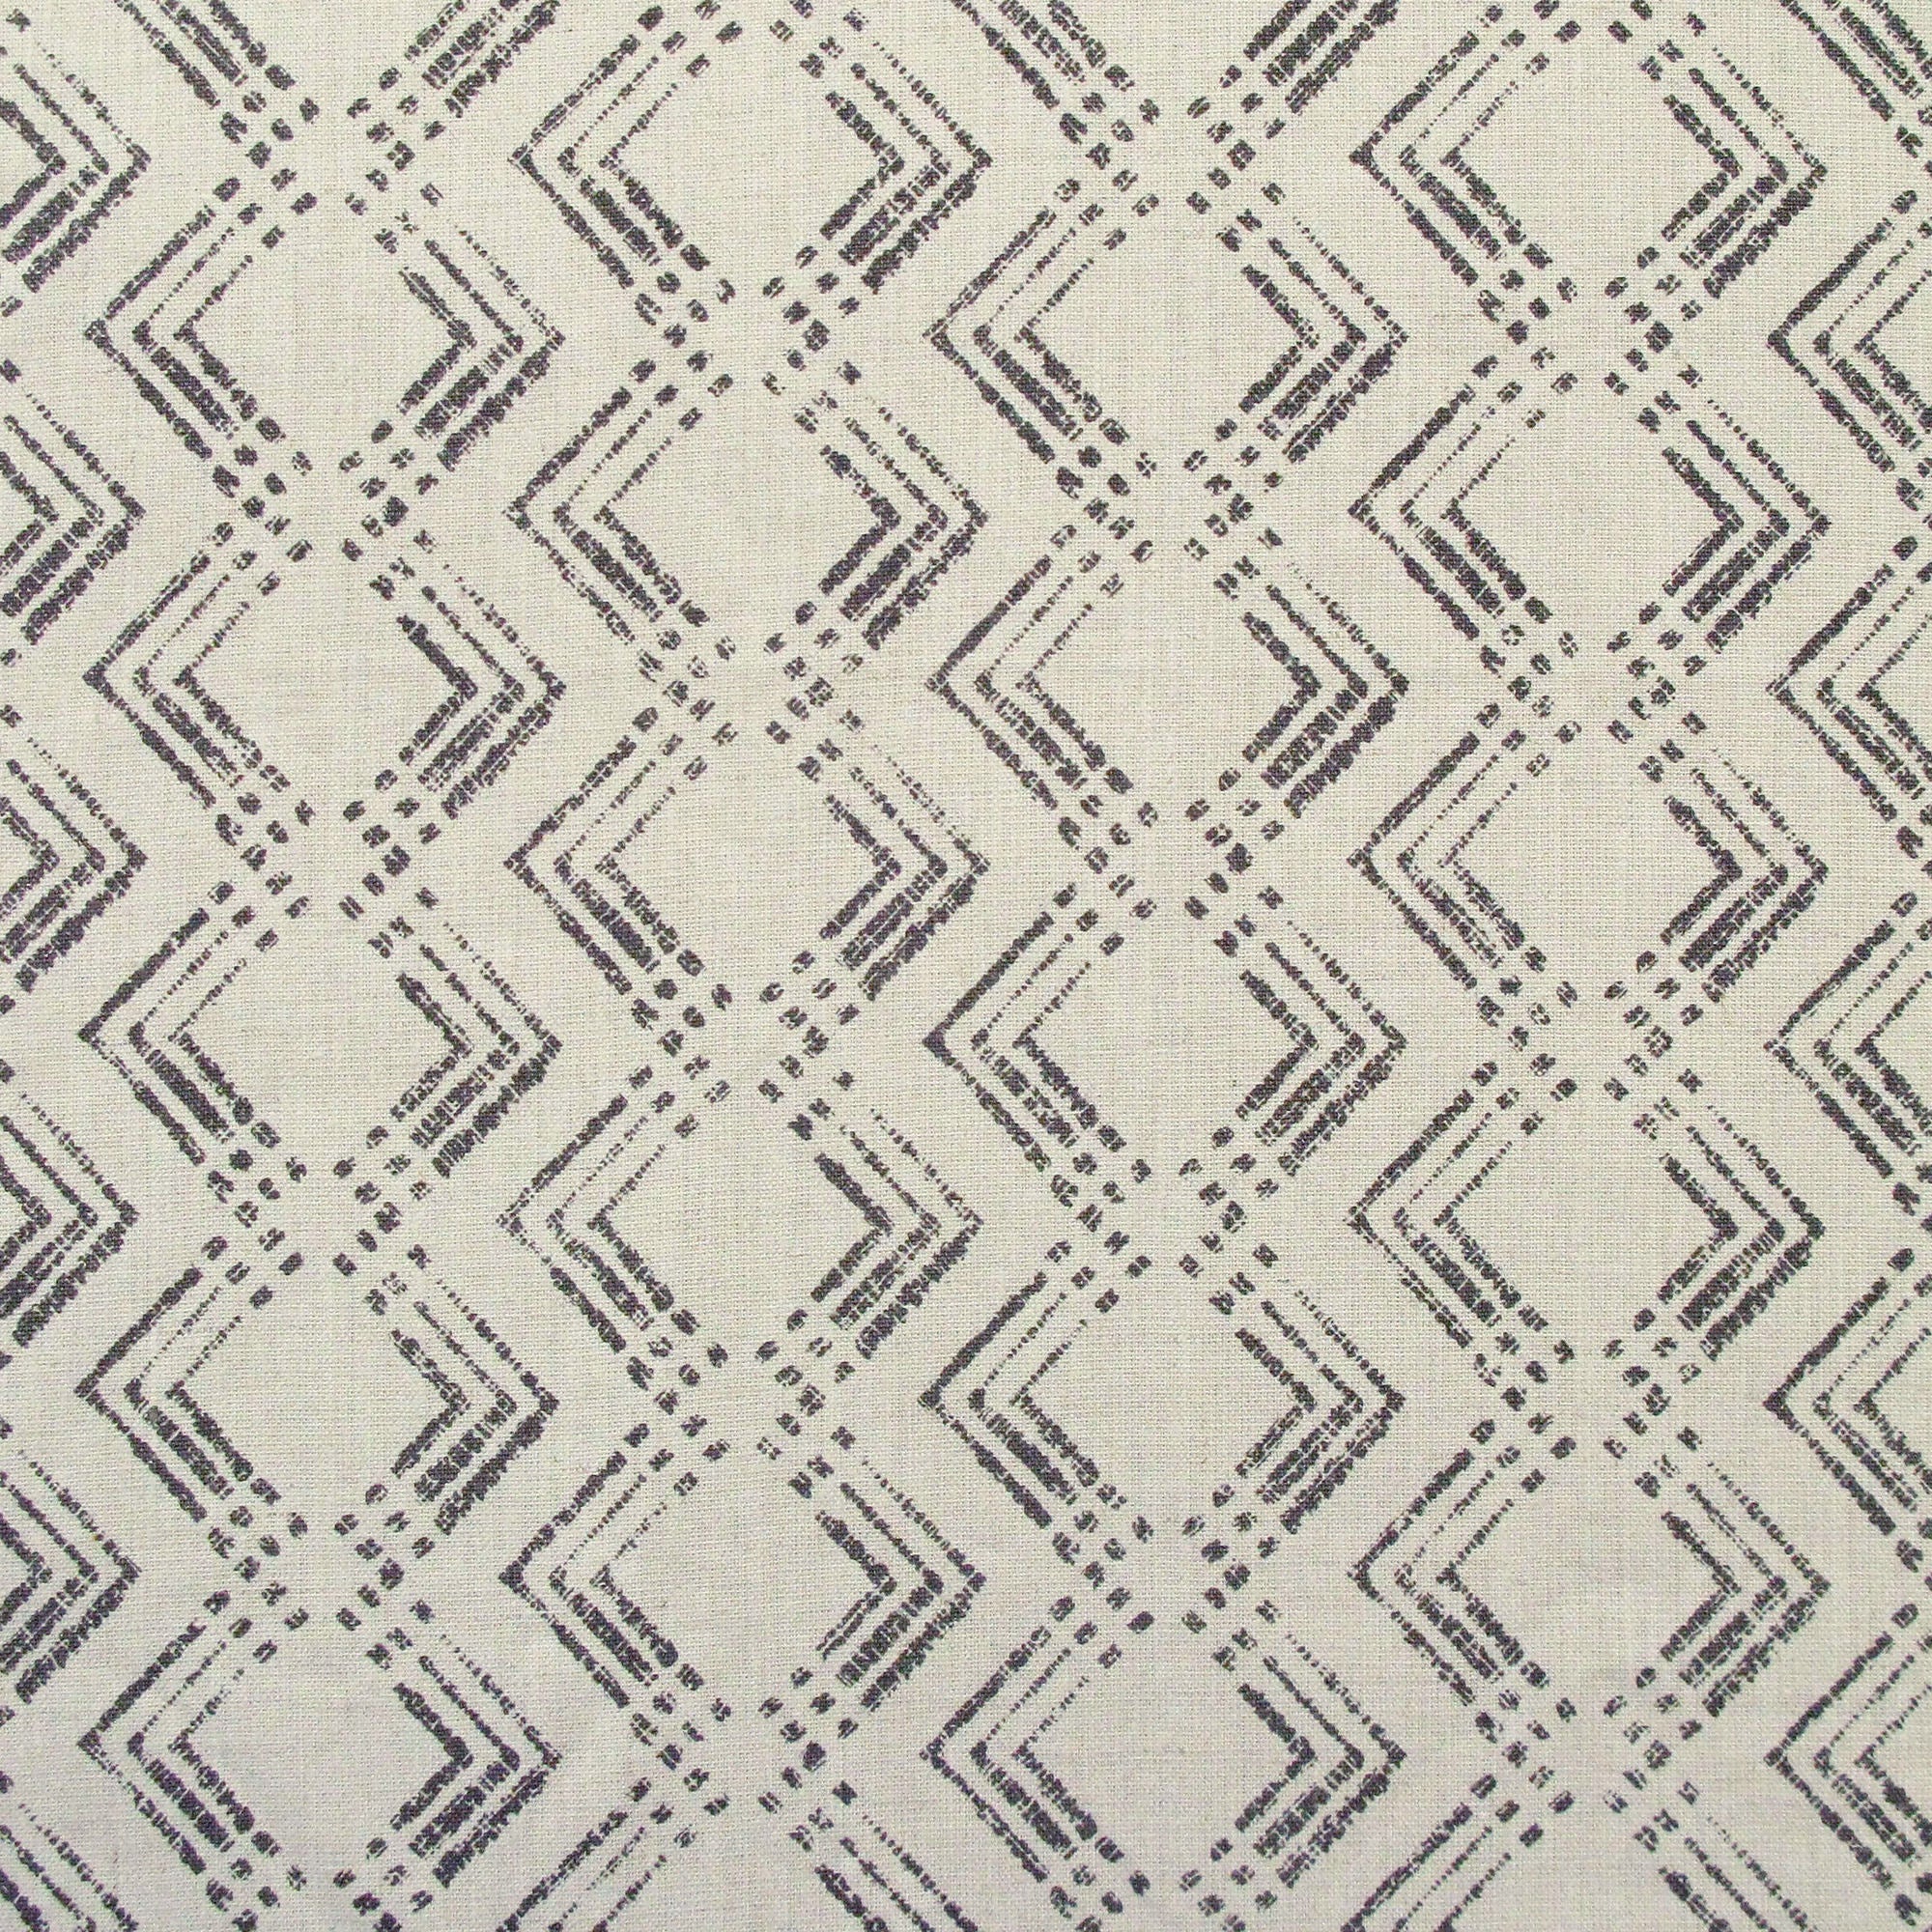 Fabric in a diamond grid pattern in charcoal on a tan field.